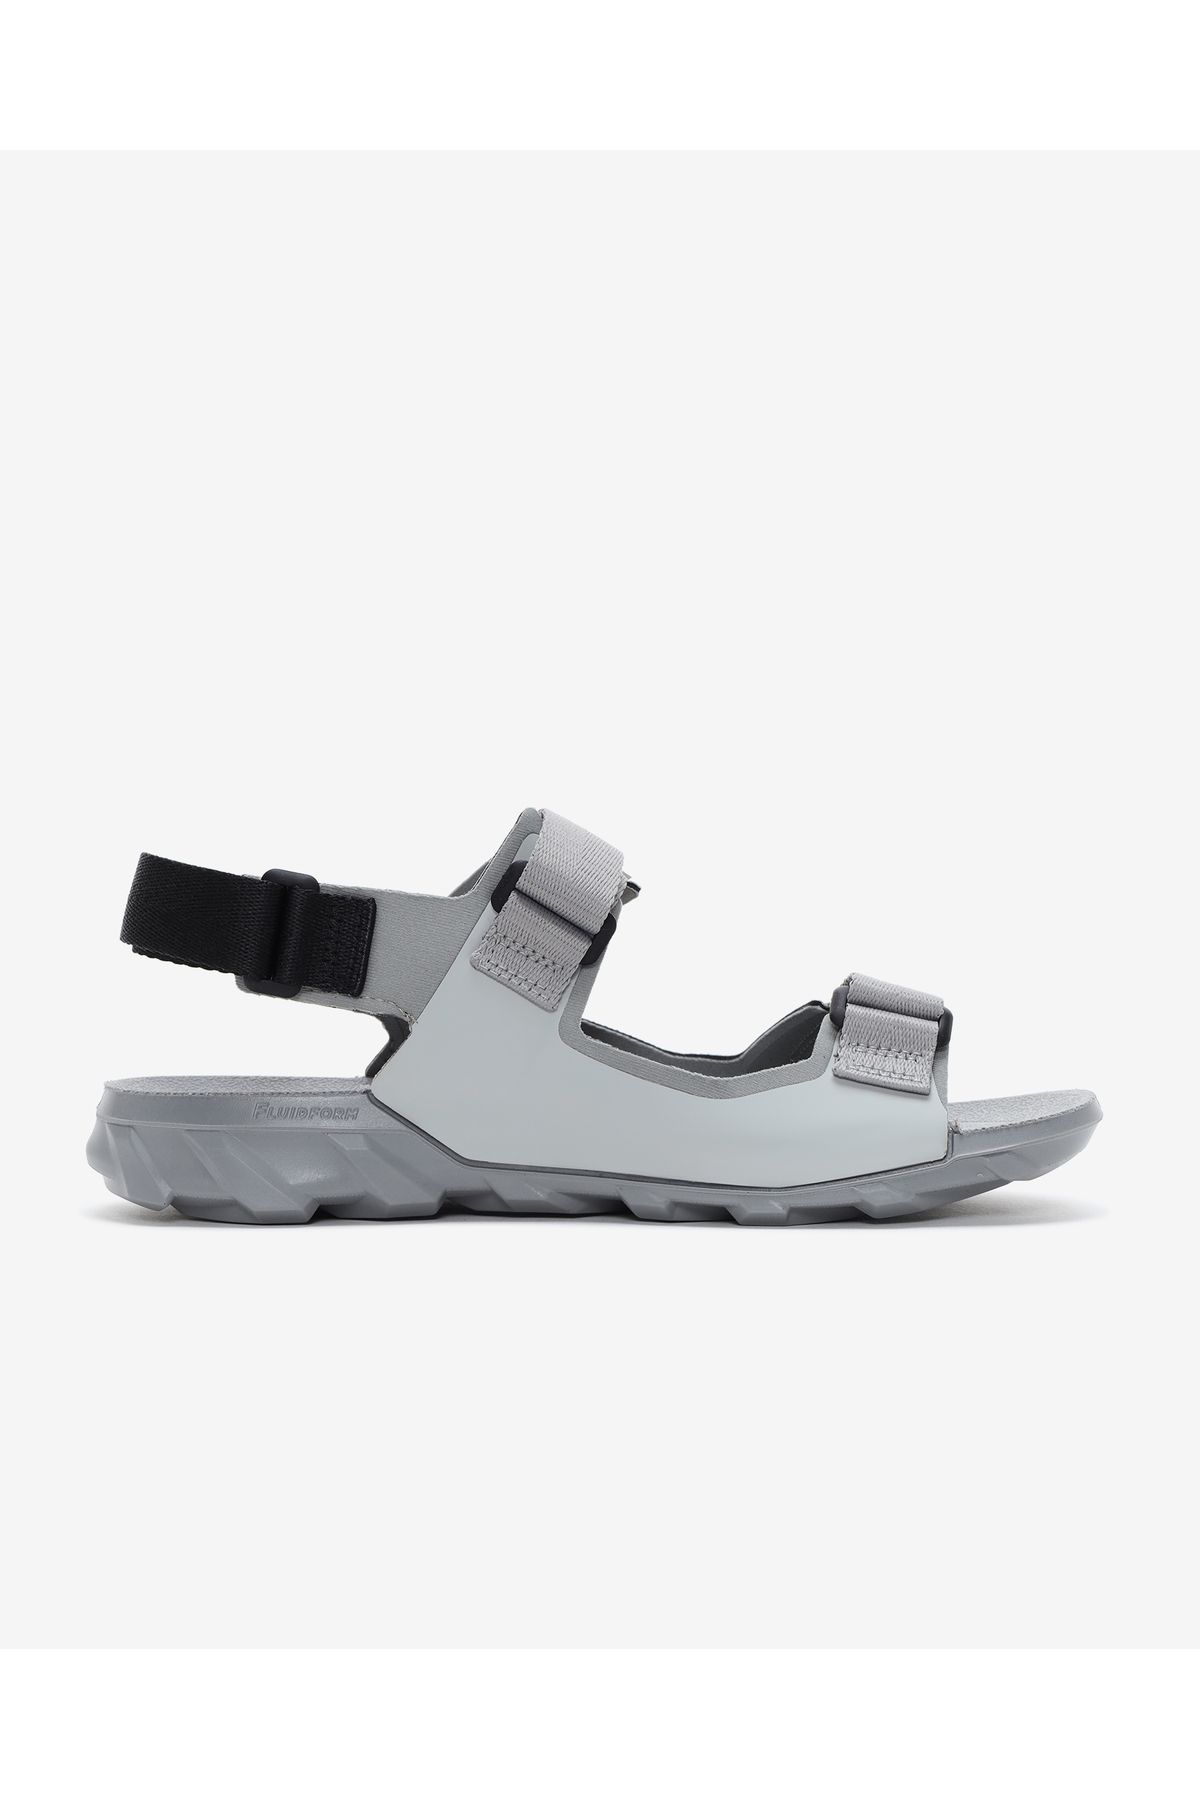 Ecco MX SANDAL M 3S Sandals Grey Men 82475455874